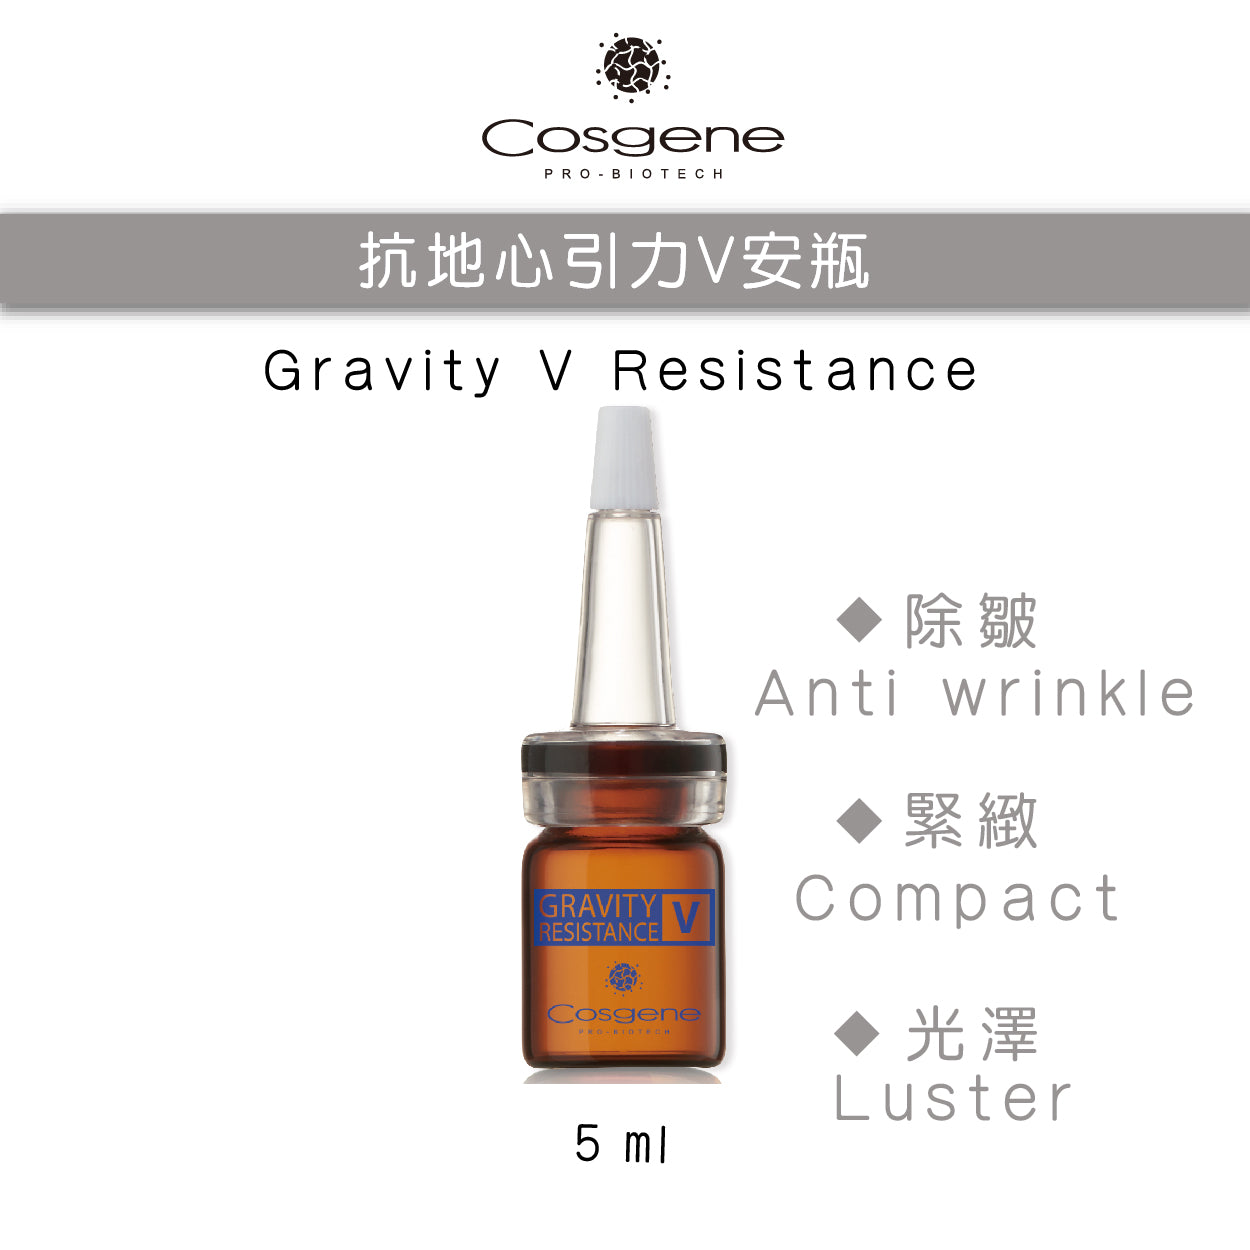 【Cosgene】Gravity V Resistance 5ml x6 Gravity V Resistance